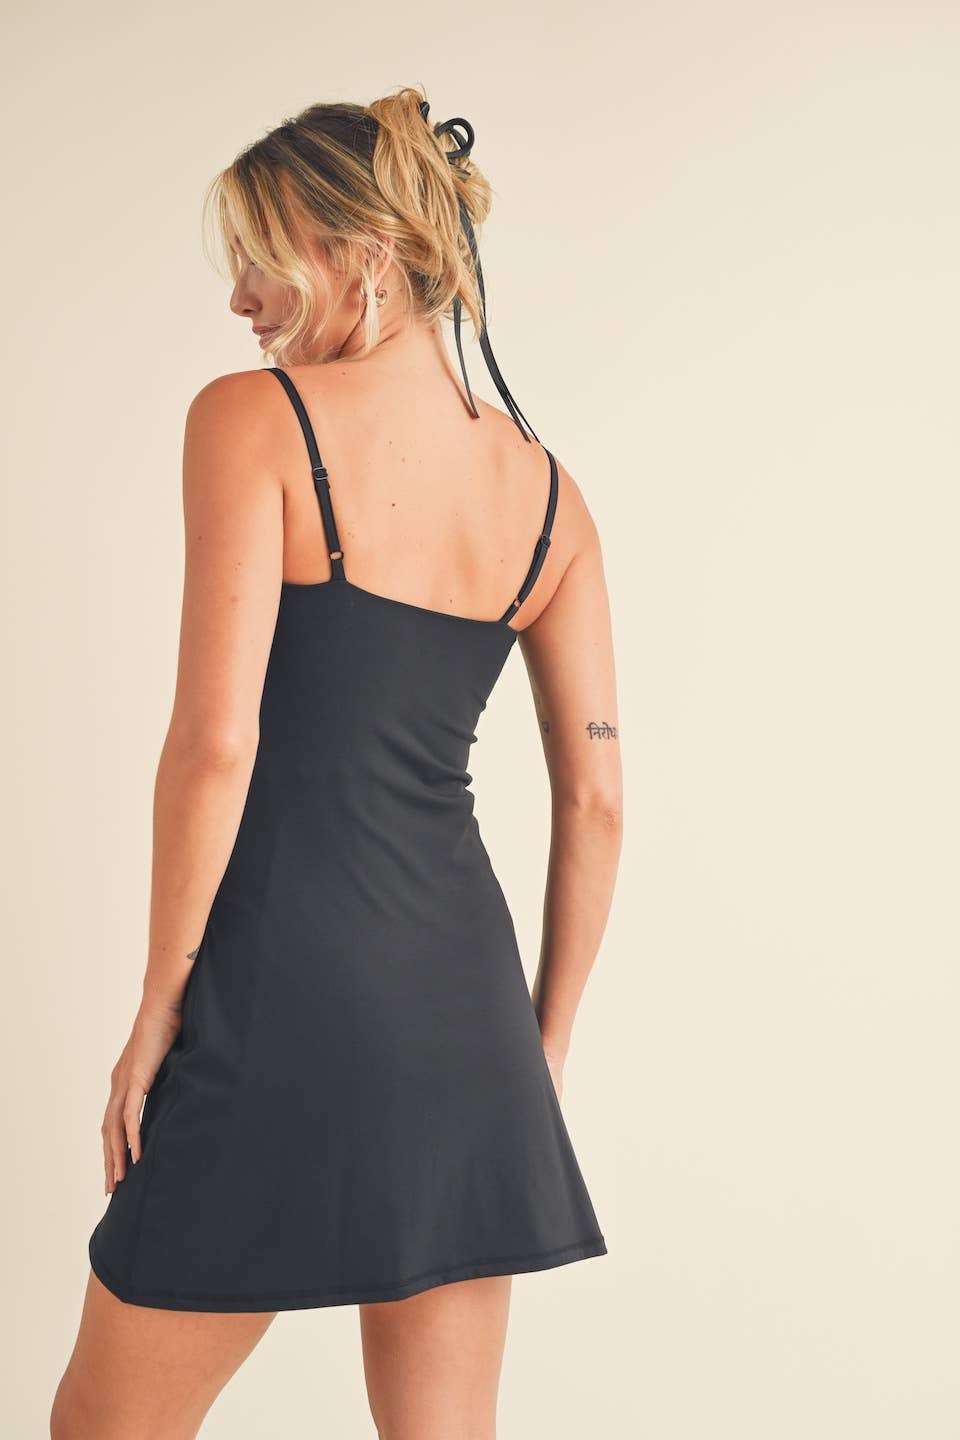 KIMBERLY C - Sweetheart Dress: Black / M